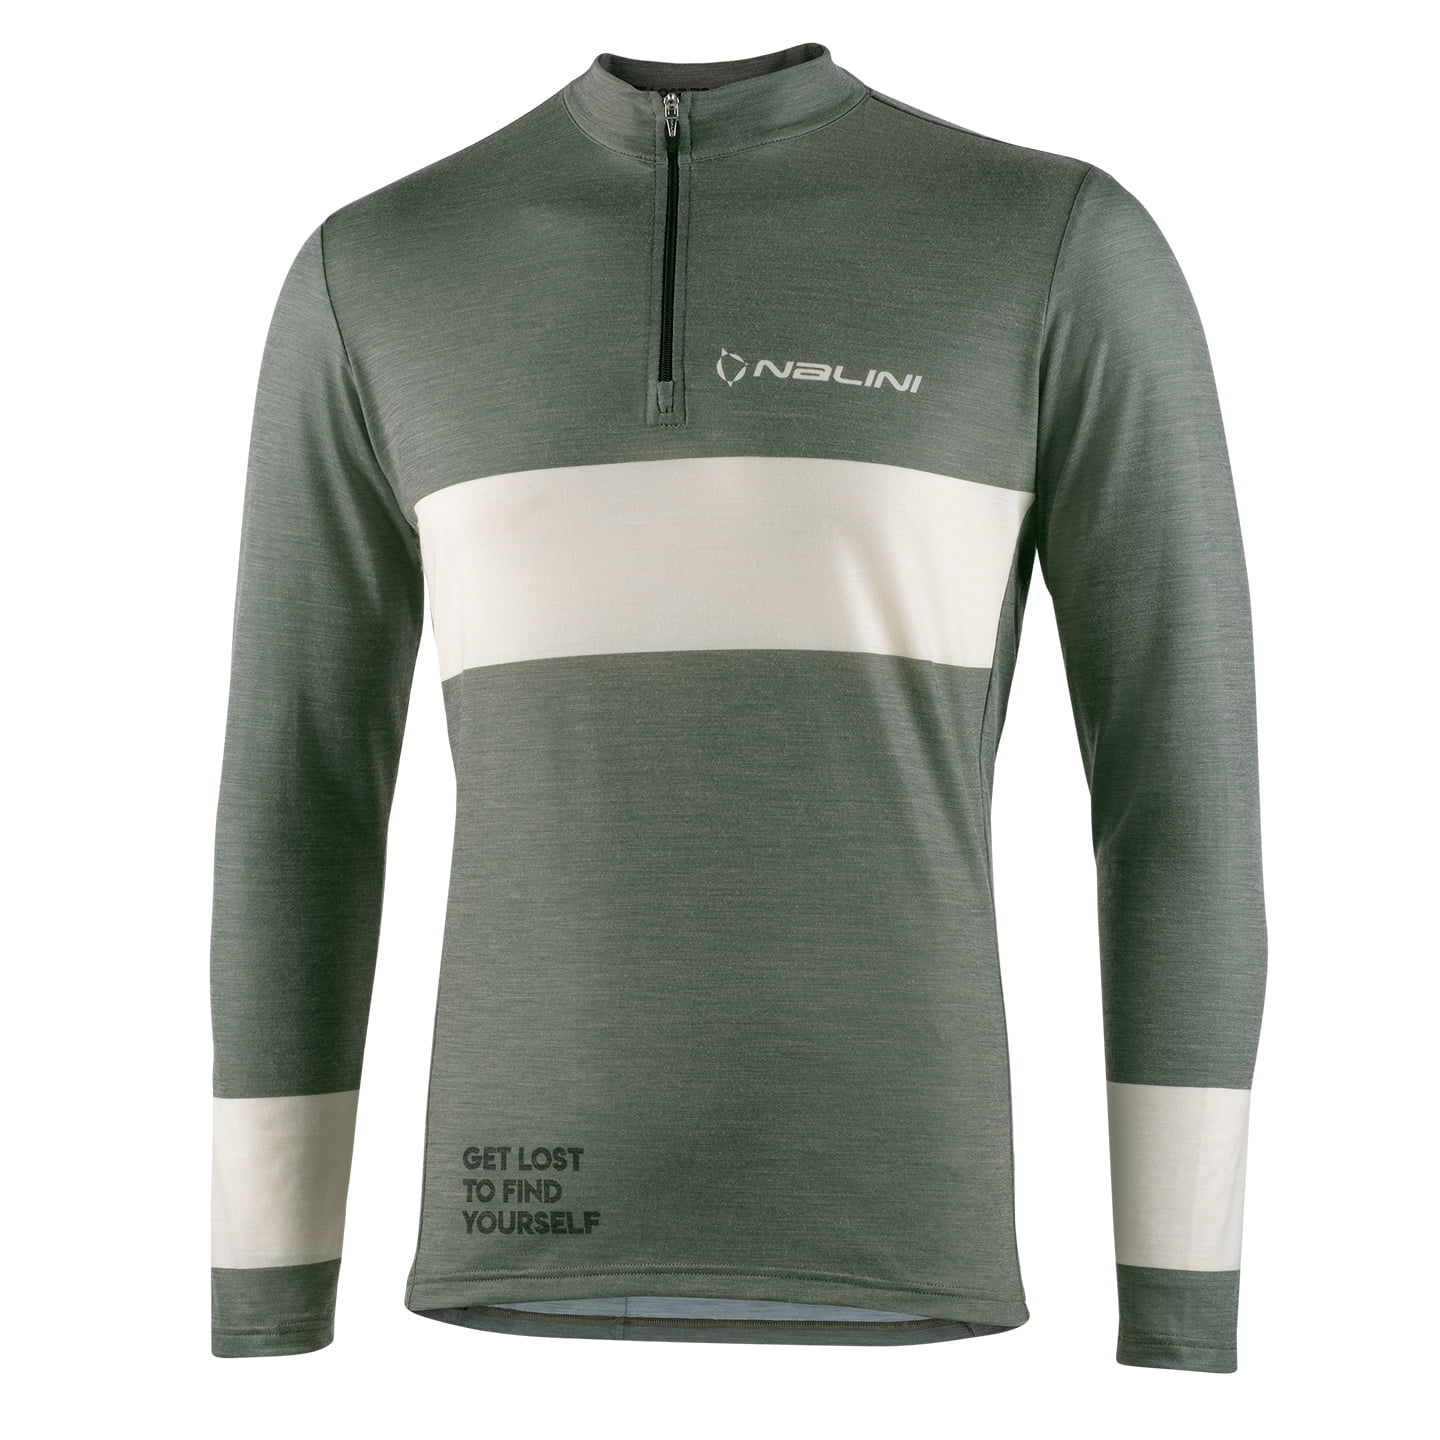 NALINI New Wool Long Sleeve Jersey Bikeshirt, for men, size M, Cycling jersey, Cycling clothing